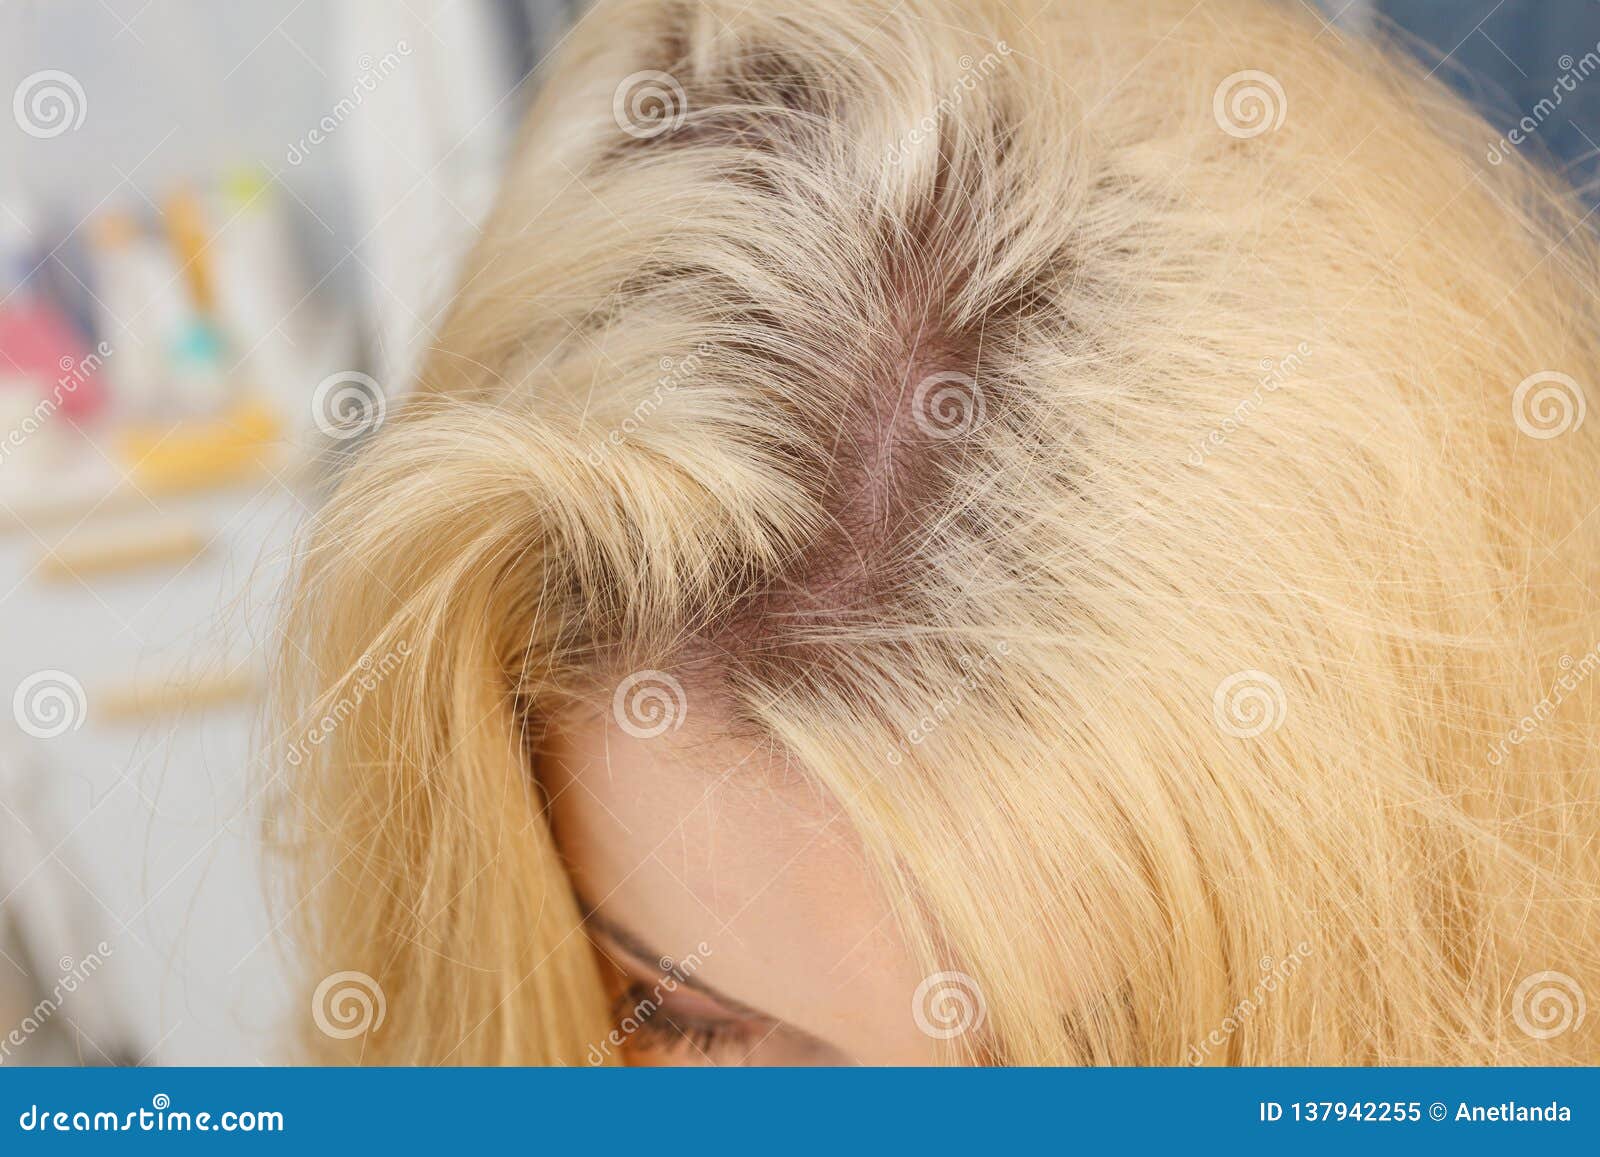 short blonde hair roots